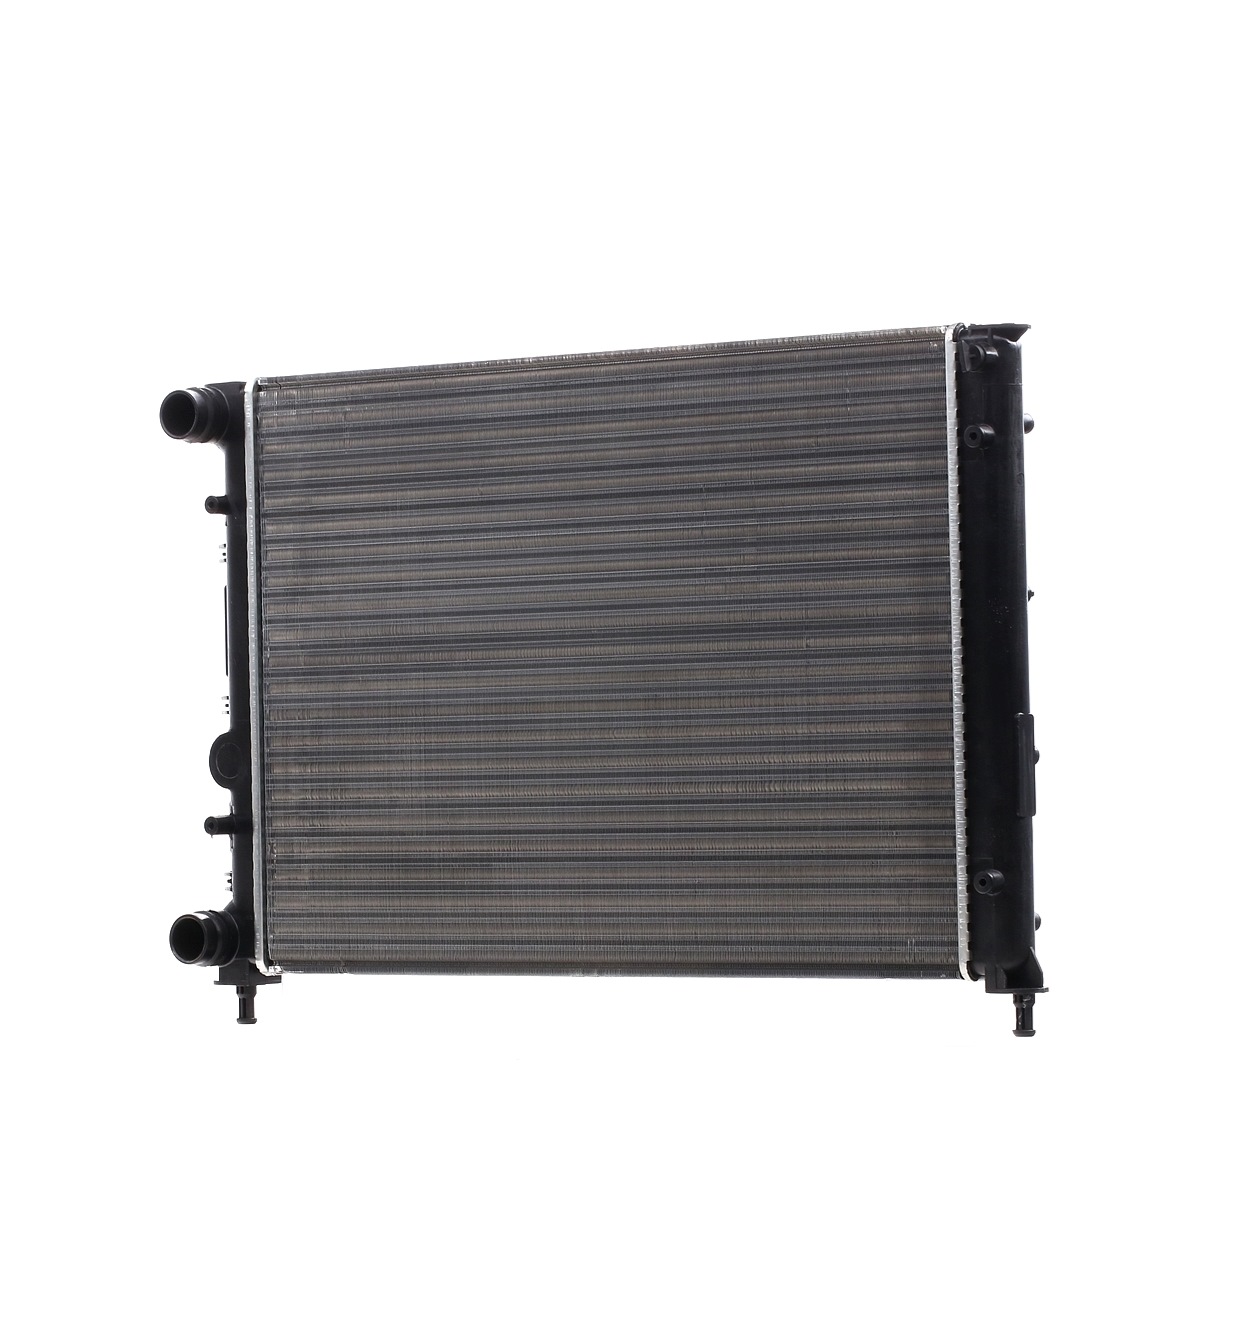 Radiator VAN WEZEL Aluminium, 578 x 414 x 26 mm, Mechanically jointed cooling fins - 01002078